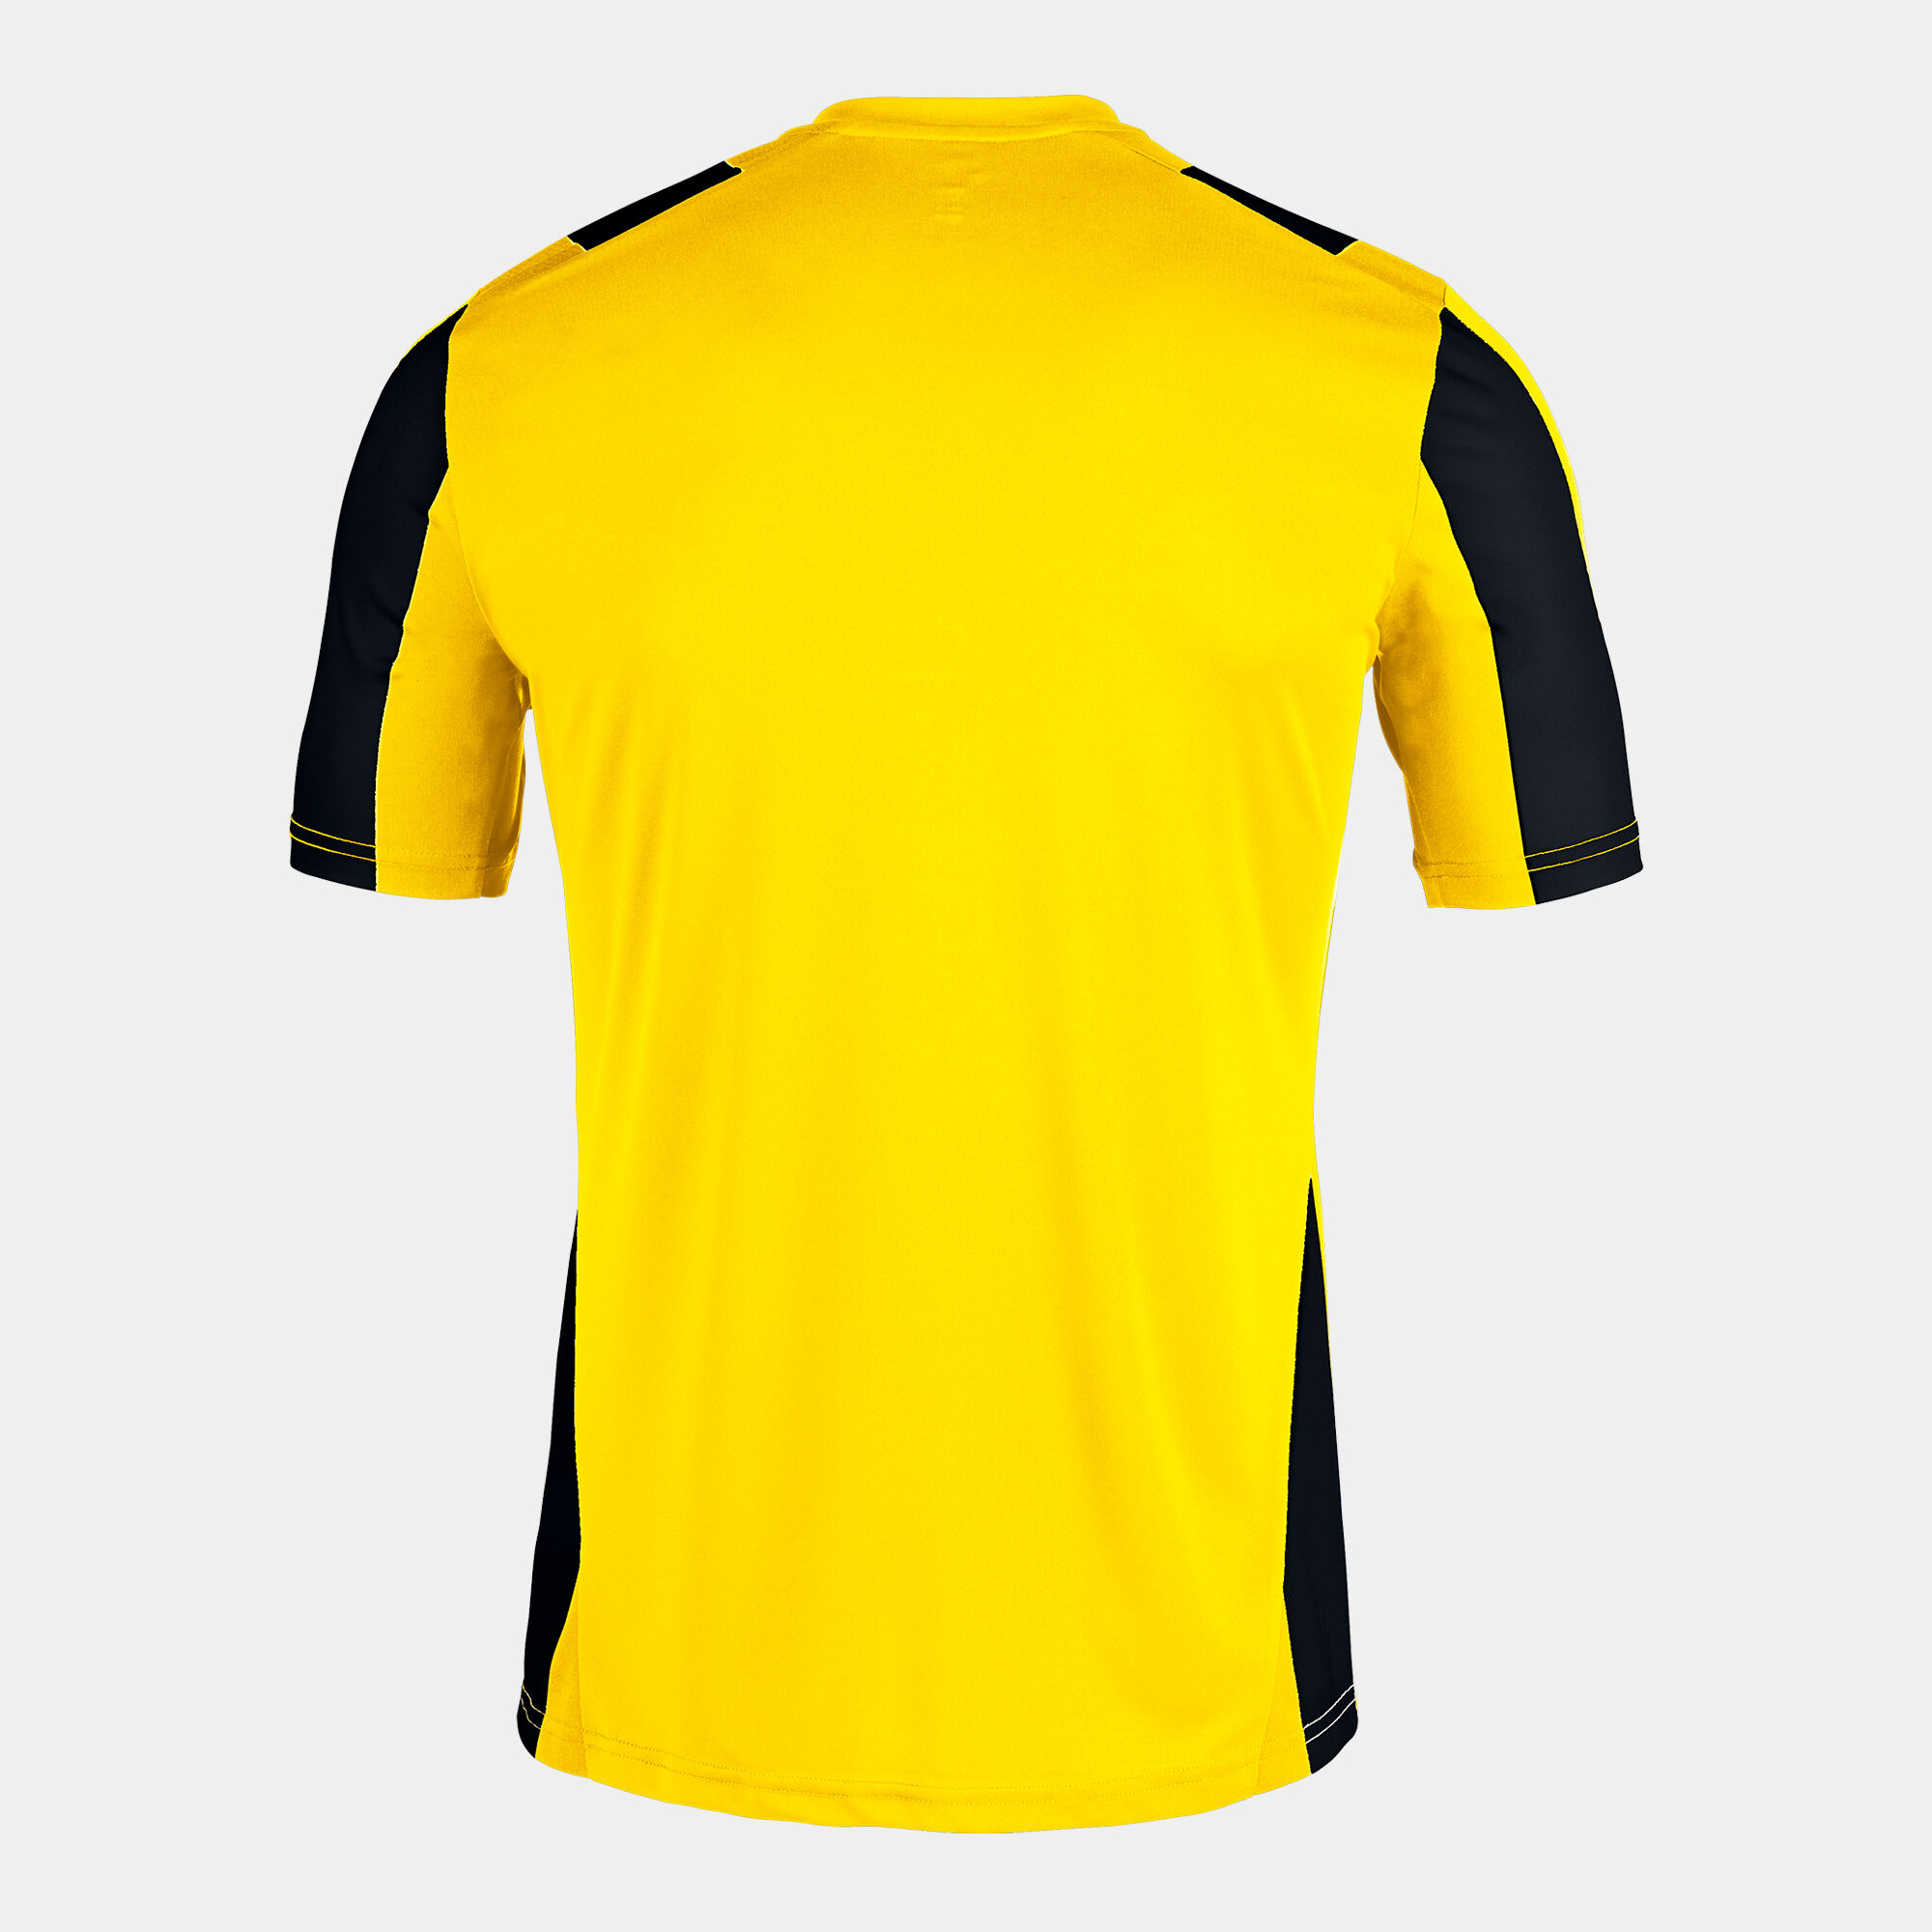 Camiseta manga corta hombre Inter amarillo negro